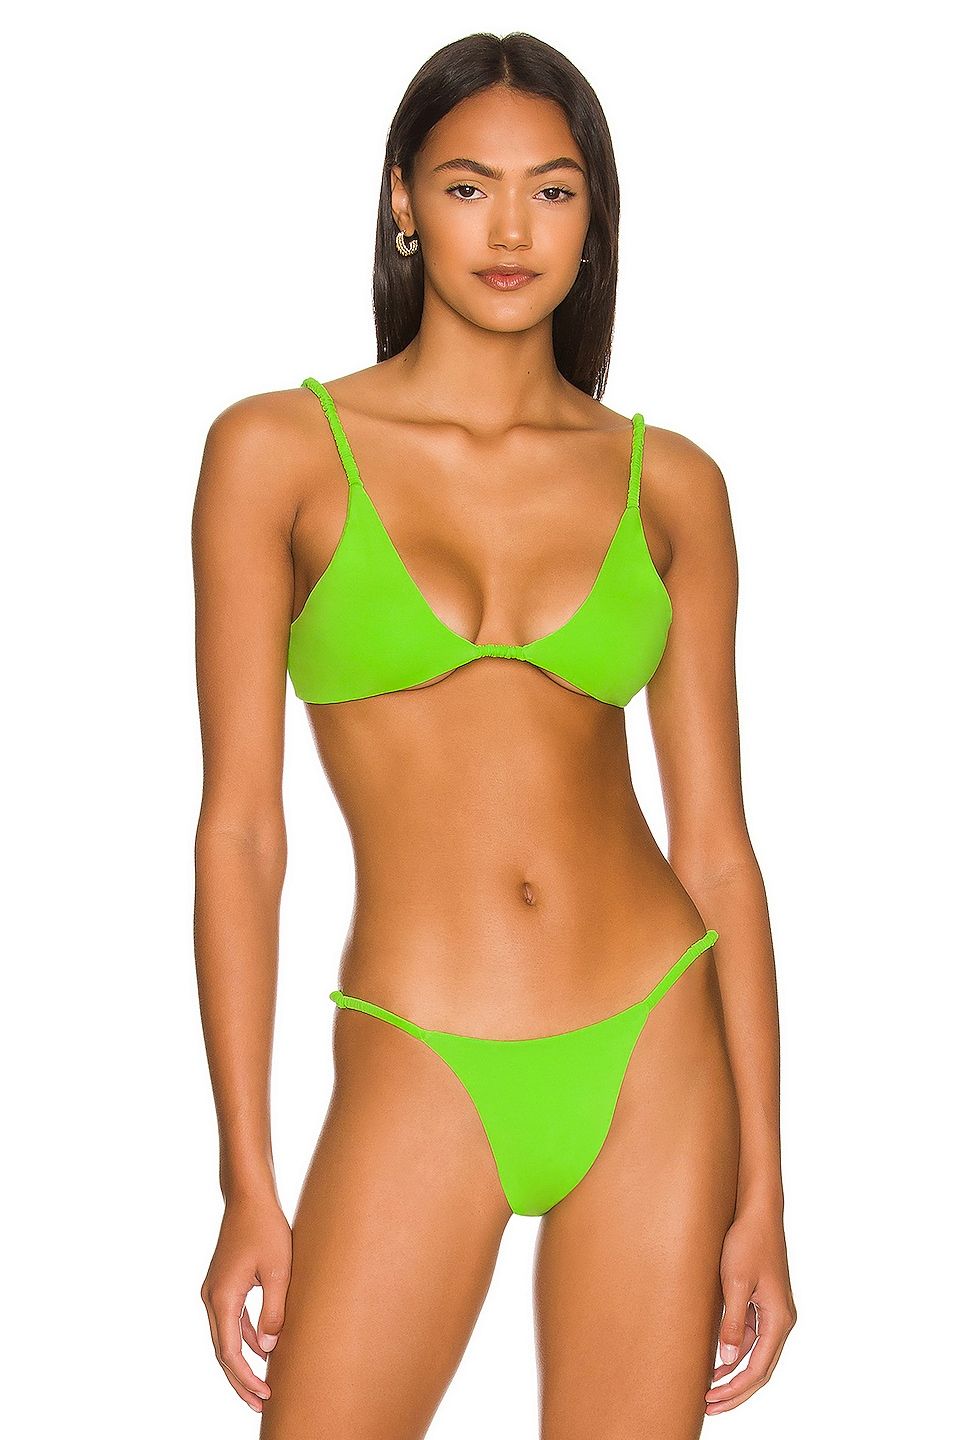 Simply Be Boux Avenue Porto Strappy Bikini Top (£18, originally £22), Megan Fox Shows Off Her Underboob in an Orange Thongkini